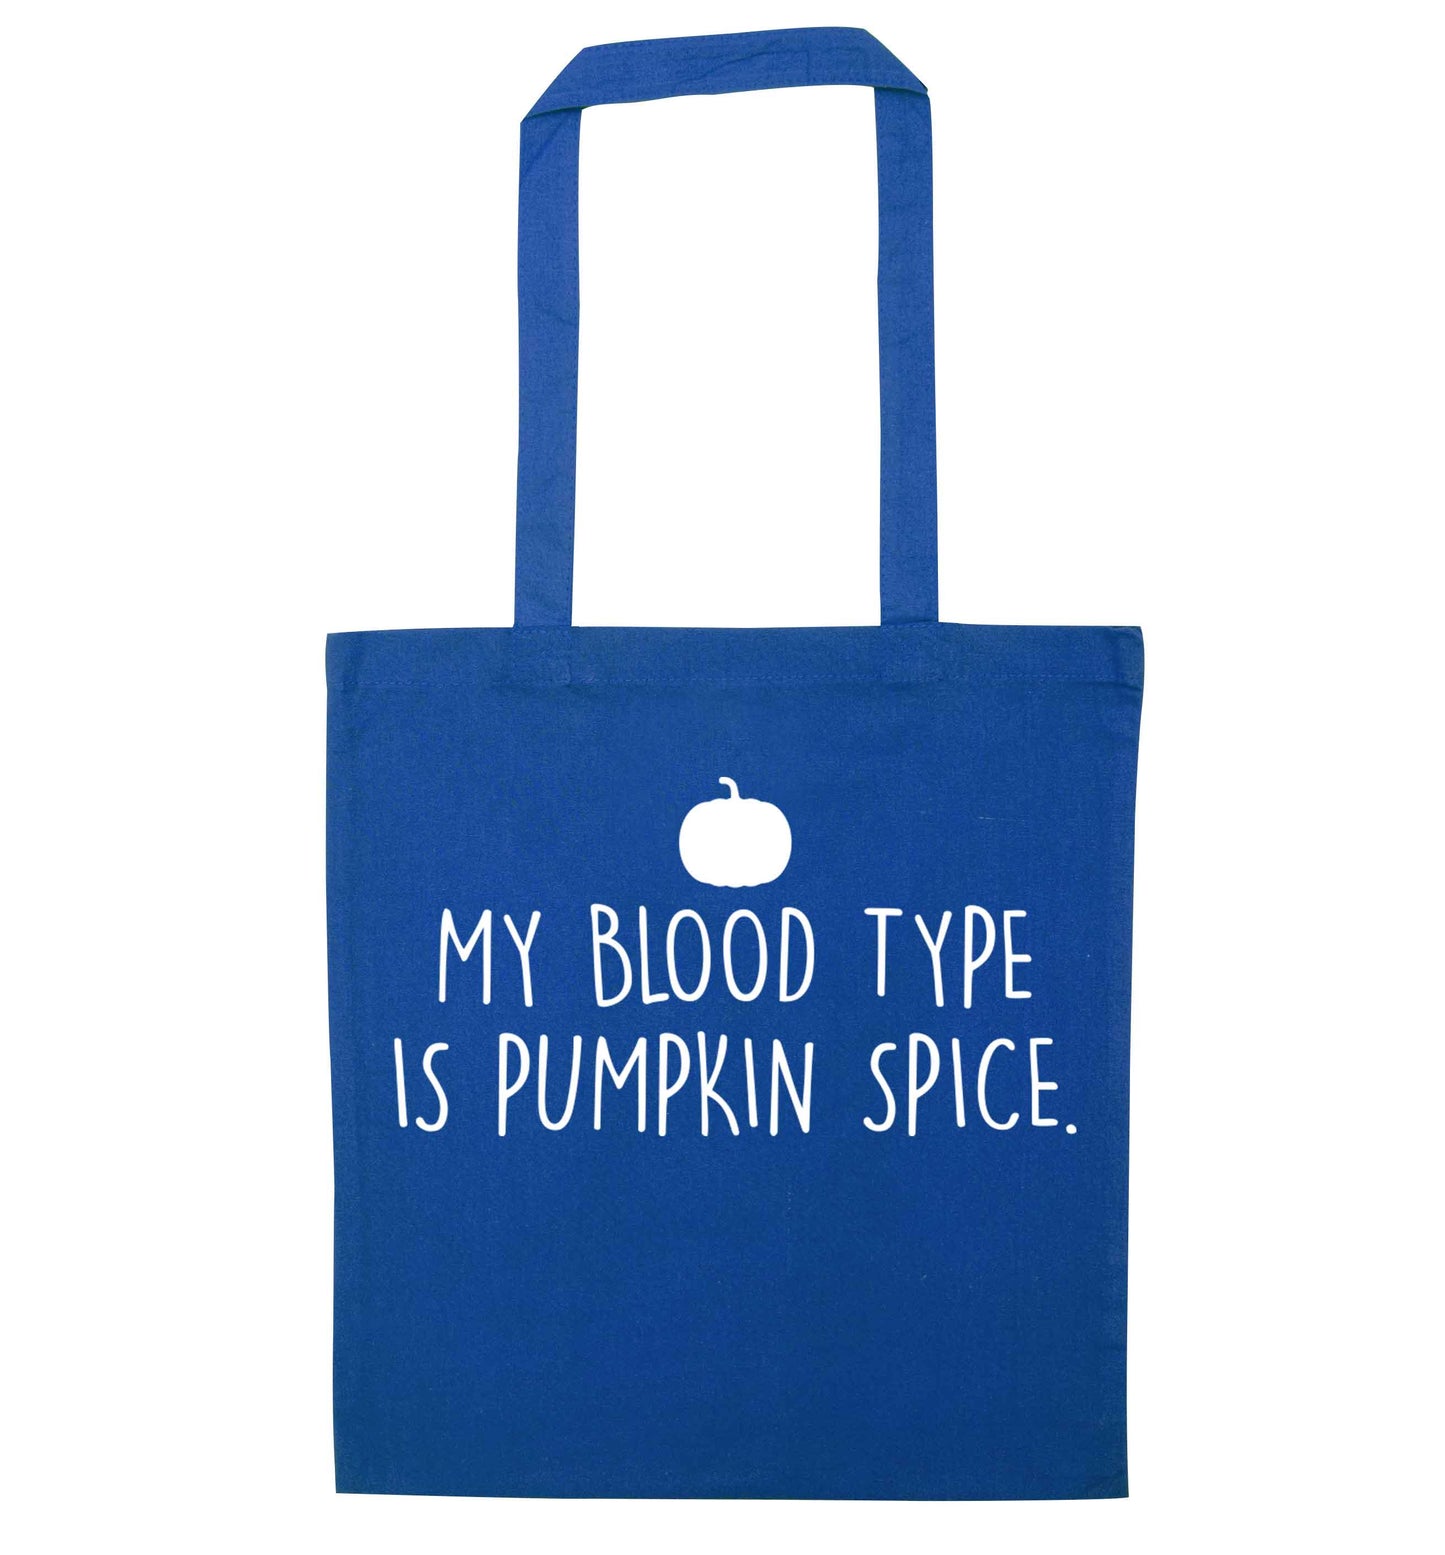 Let Be Pumpkin Spice blue tote bag